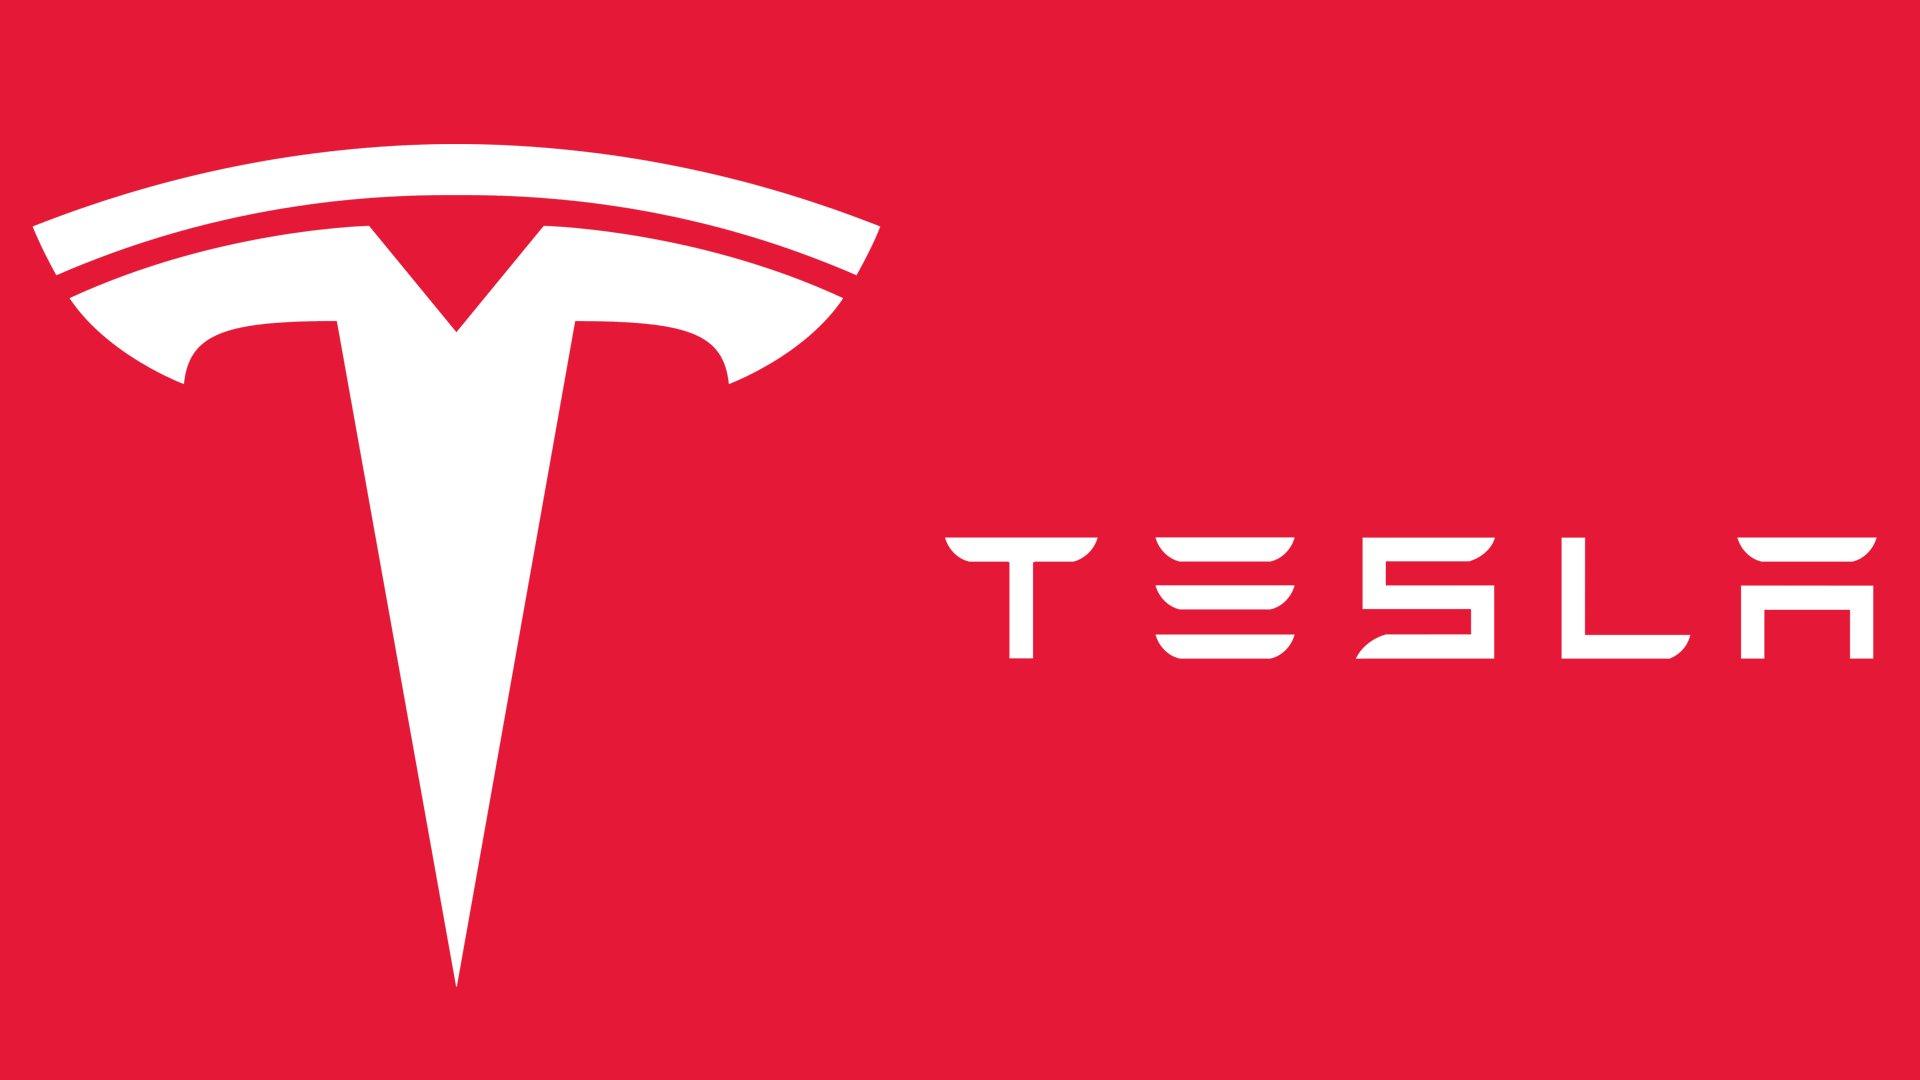 Color Tesla logo